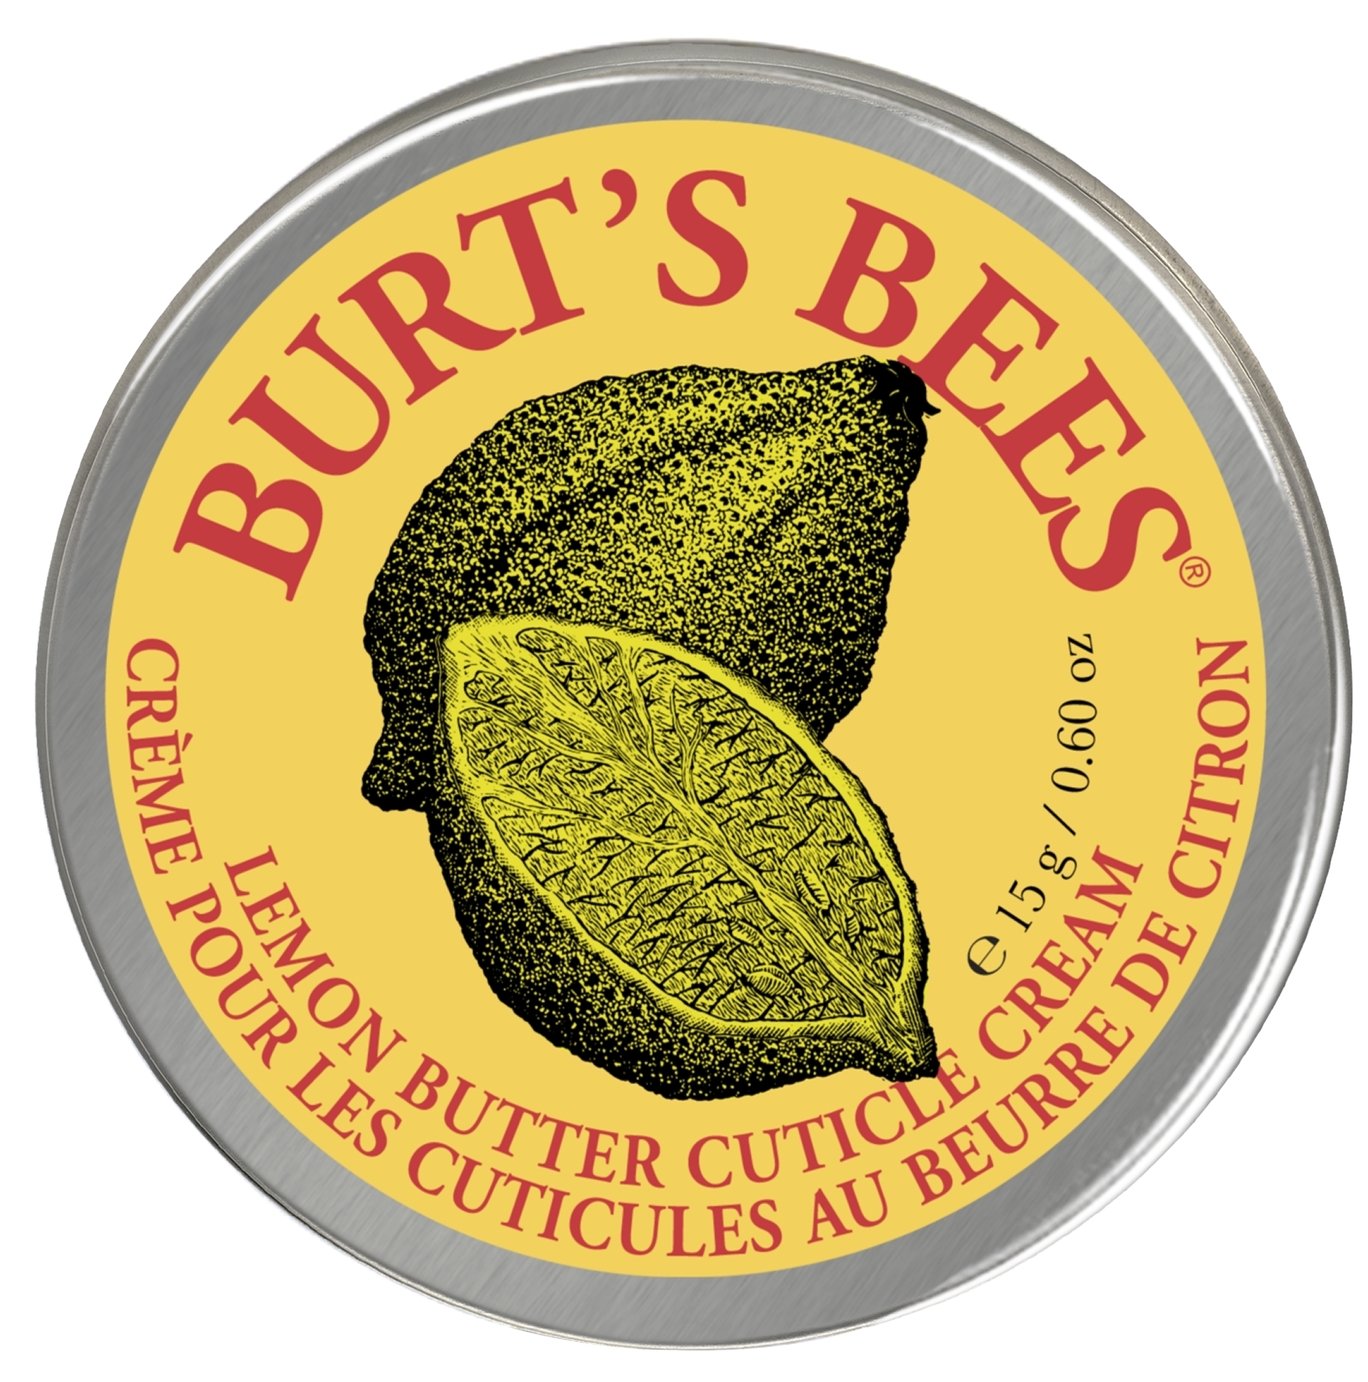 Burt's Bees Lemon Butter Cuticle Cream - 15g